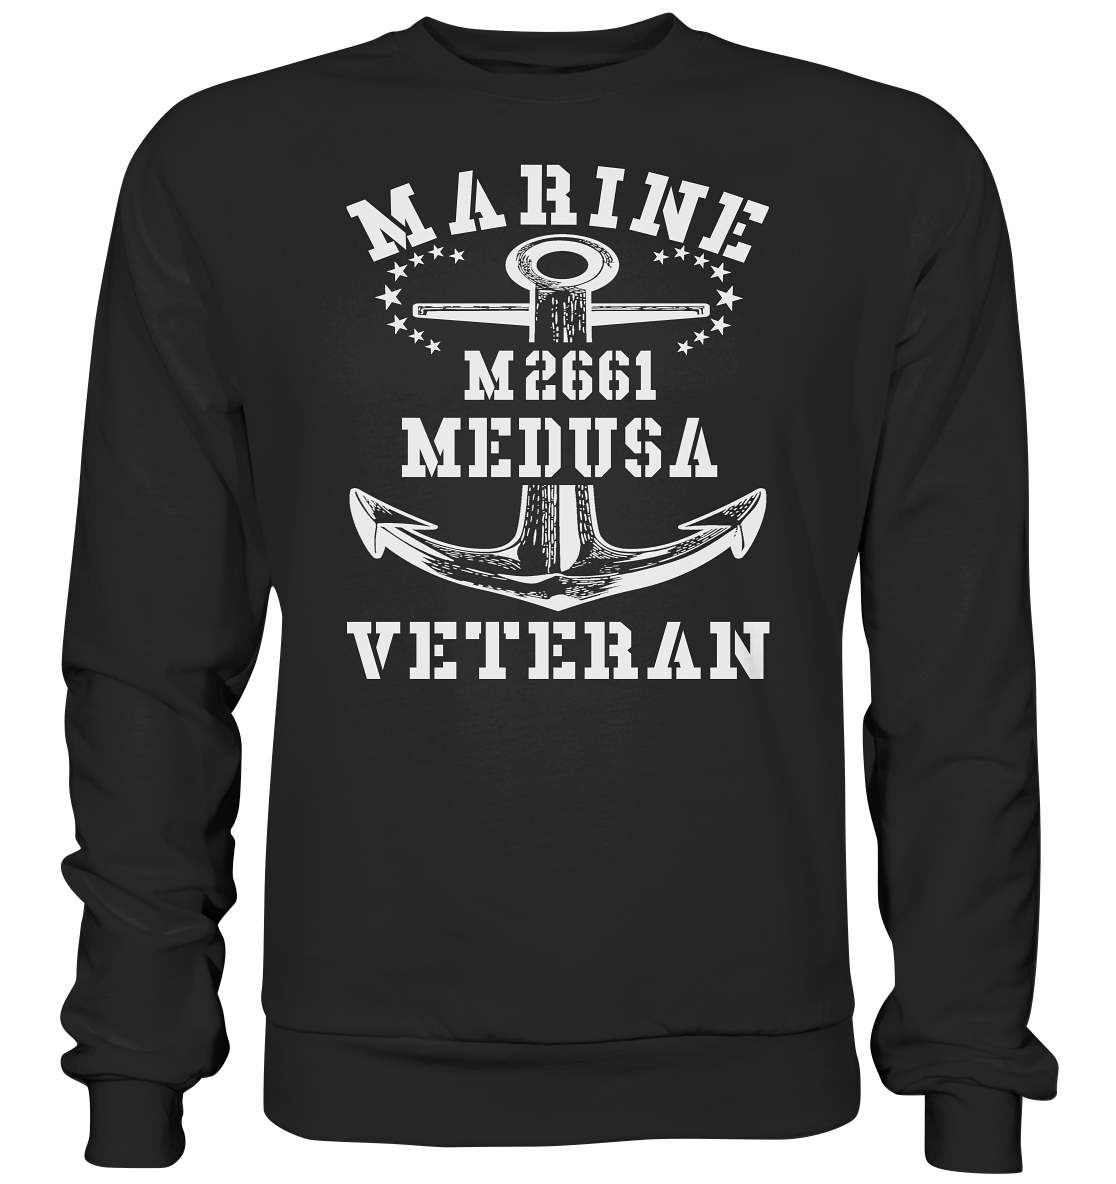 BiMi M2661 MEDUSA Marine Veteran - Premium Sweatshirt